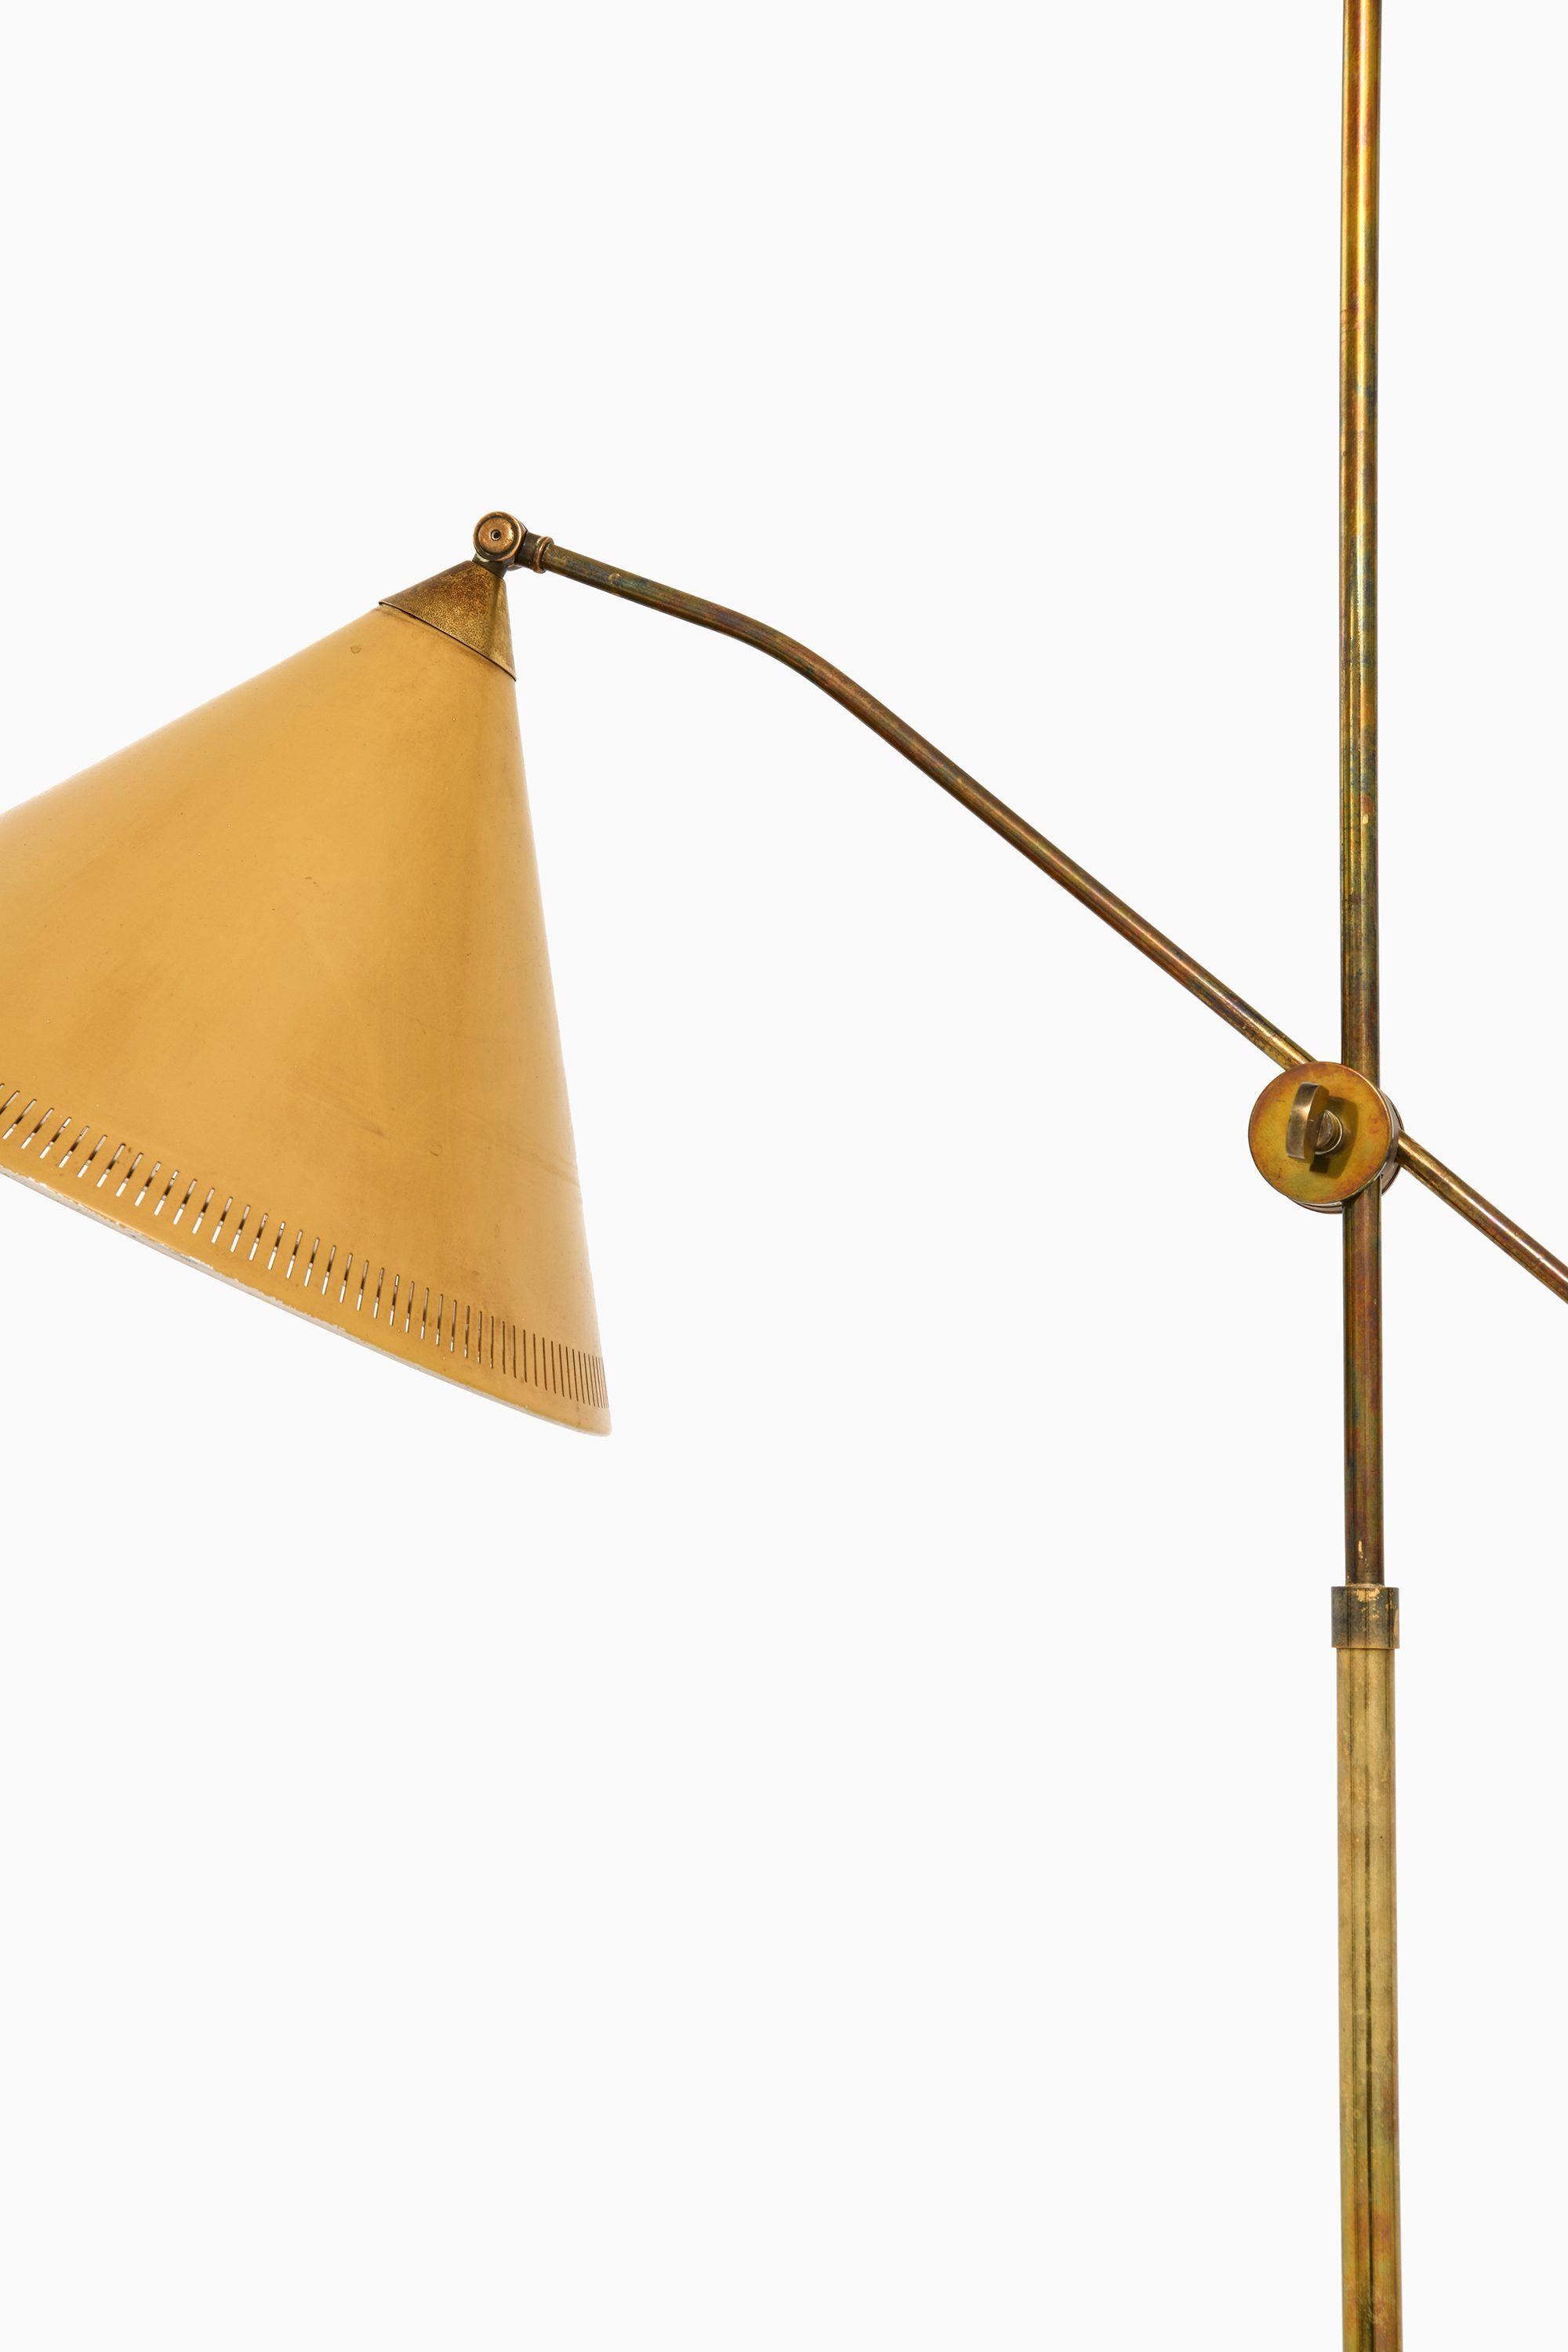 Scandinavian Modern Floor Lamp in Brass and Original Yellow Lamp Shade, 1950's For Sale